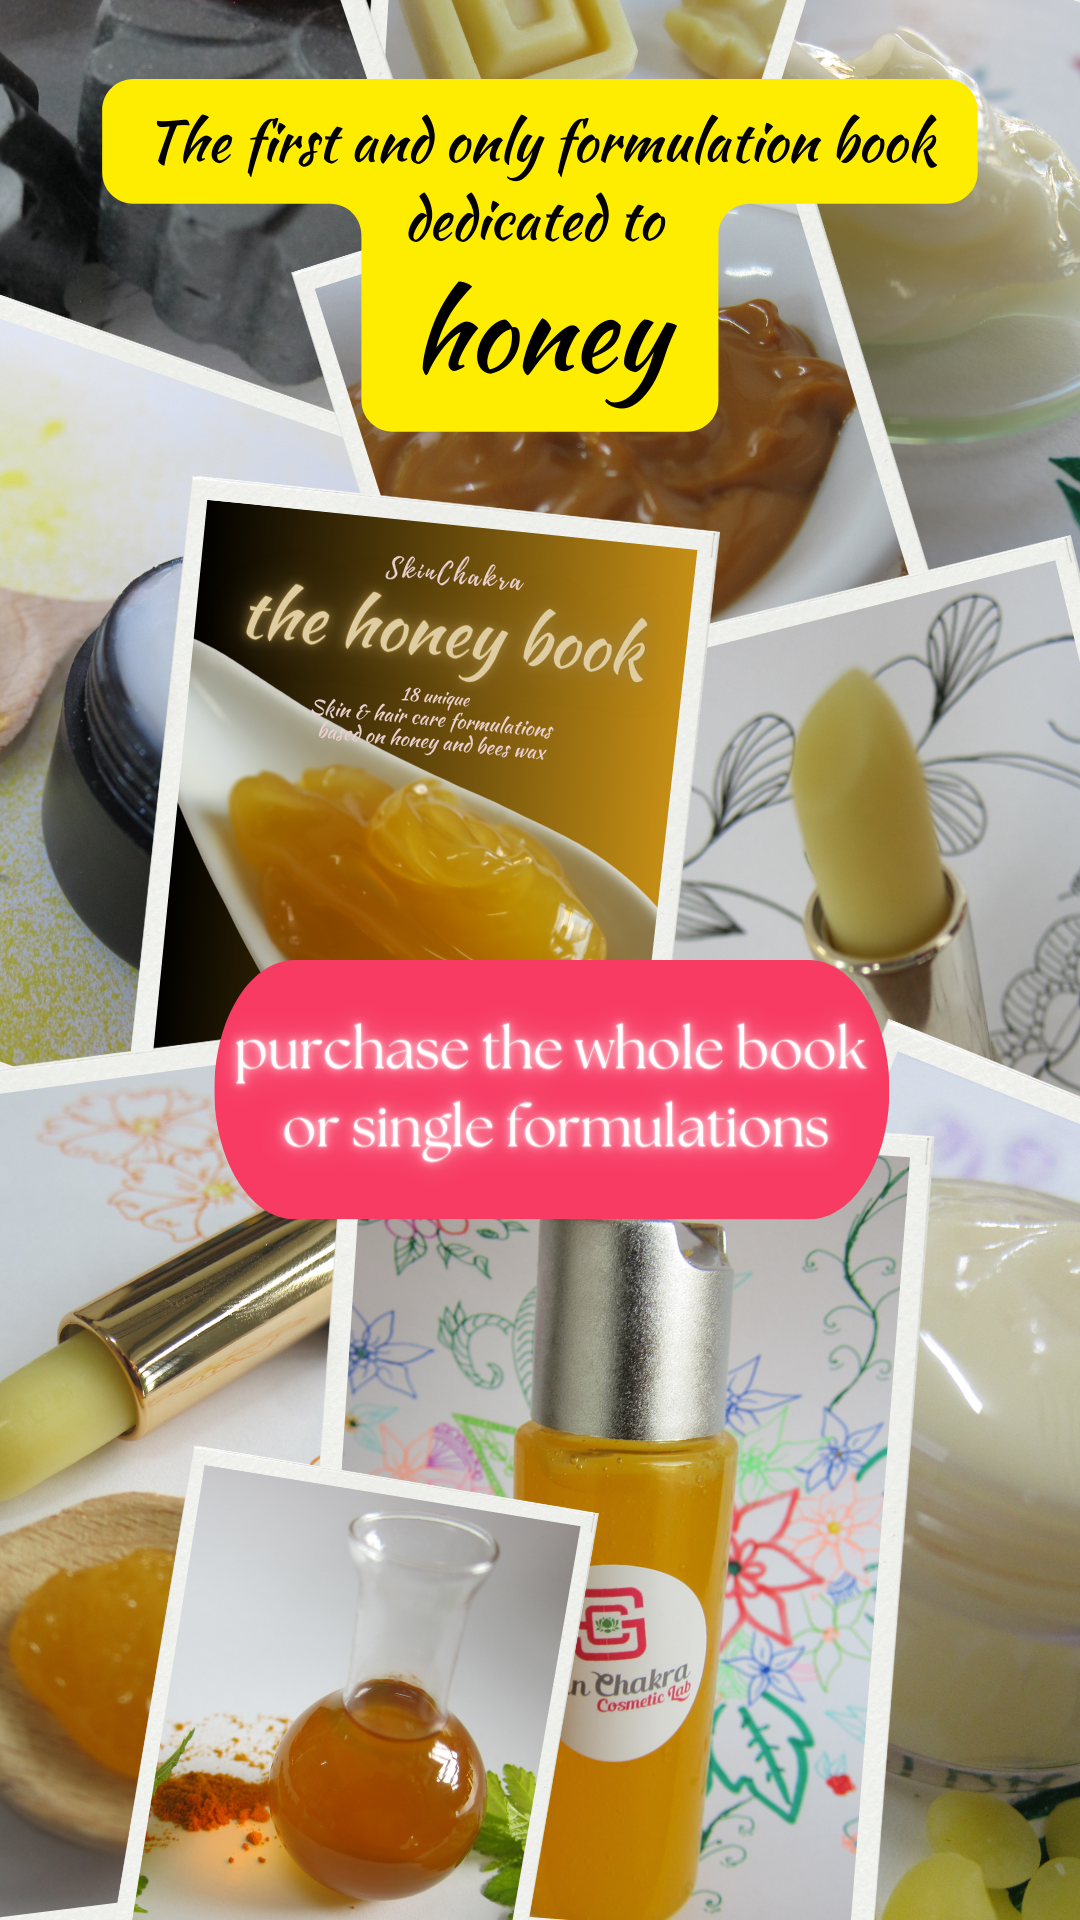 Honey formulation book